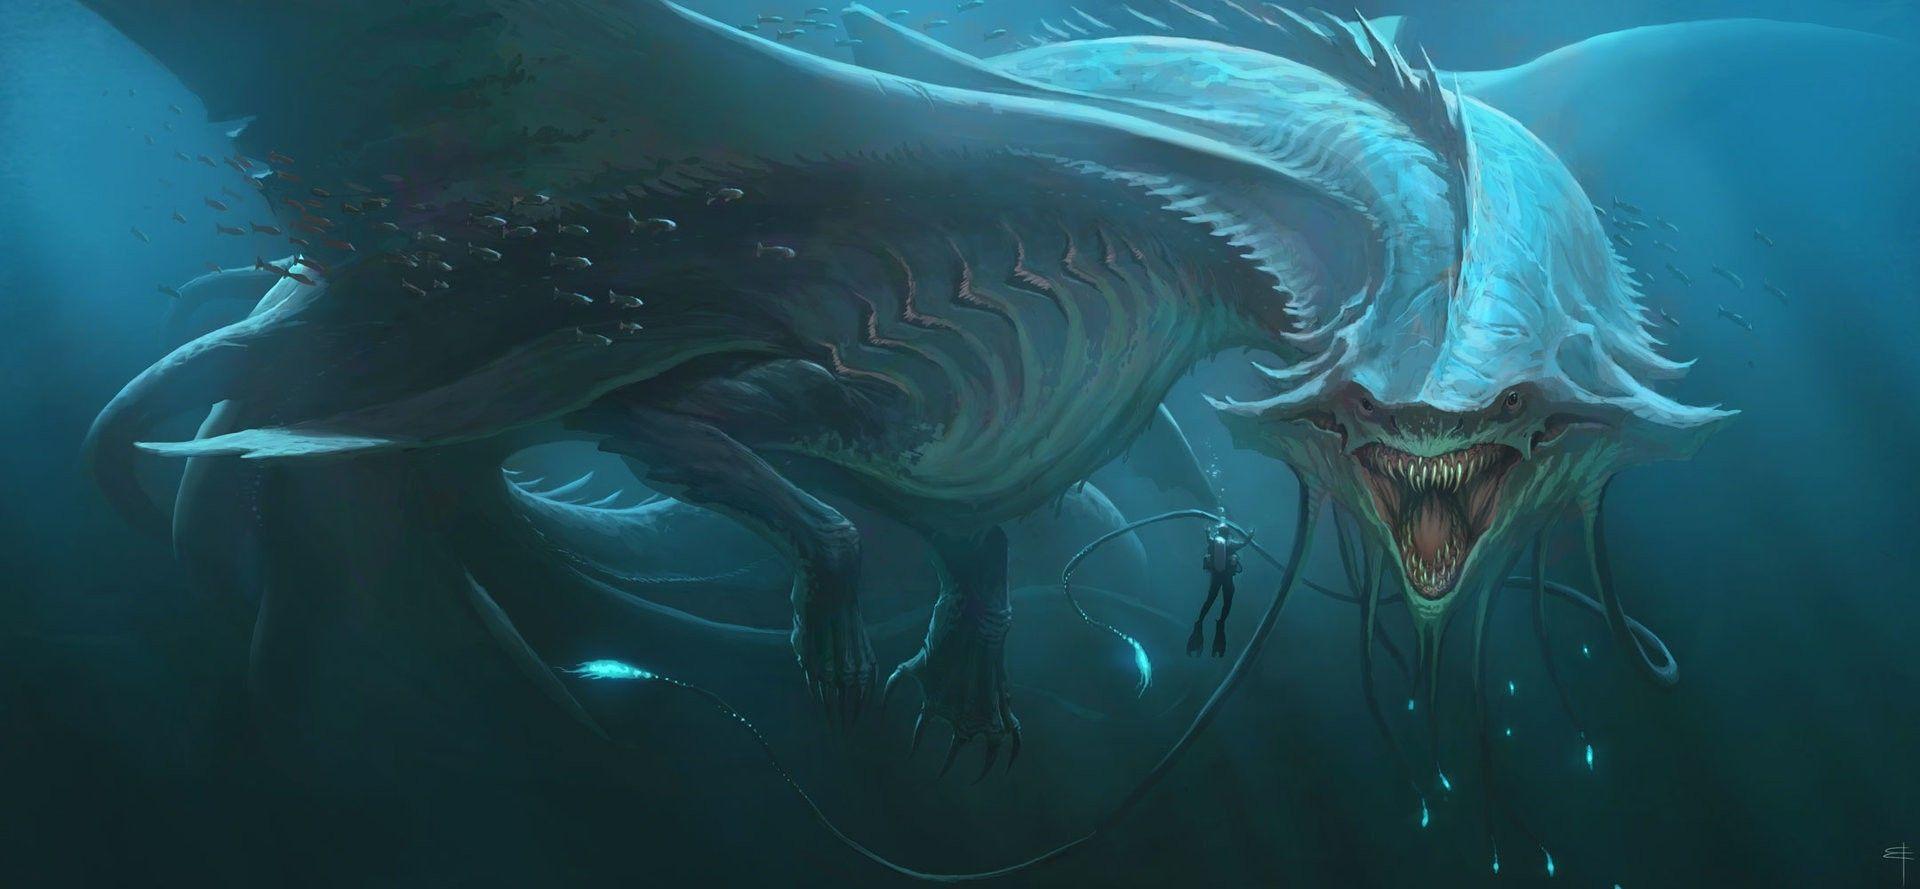 digital Art, Fantasy Art, Creature, Sea Monsters, Underwater, Sea